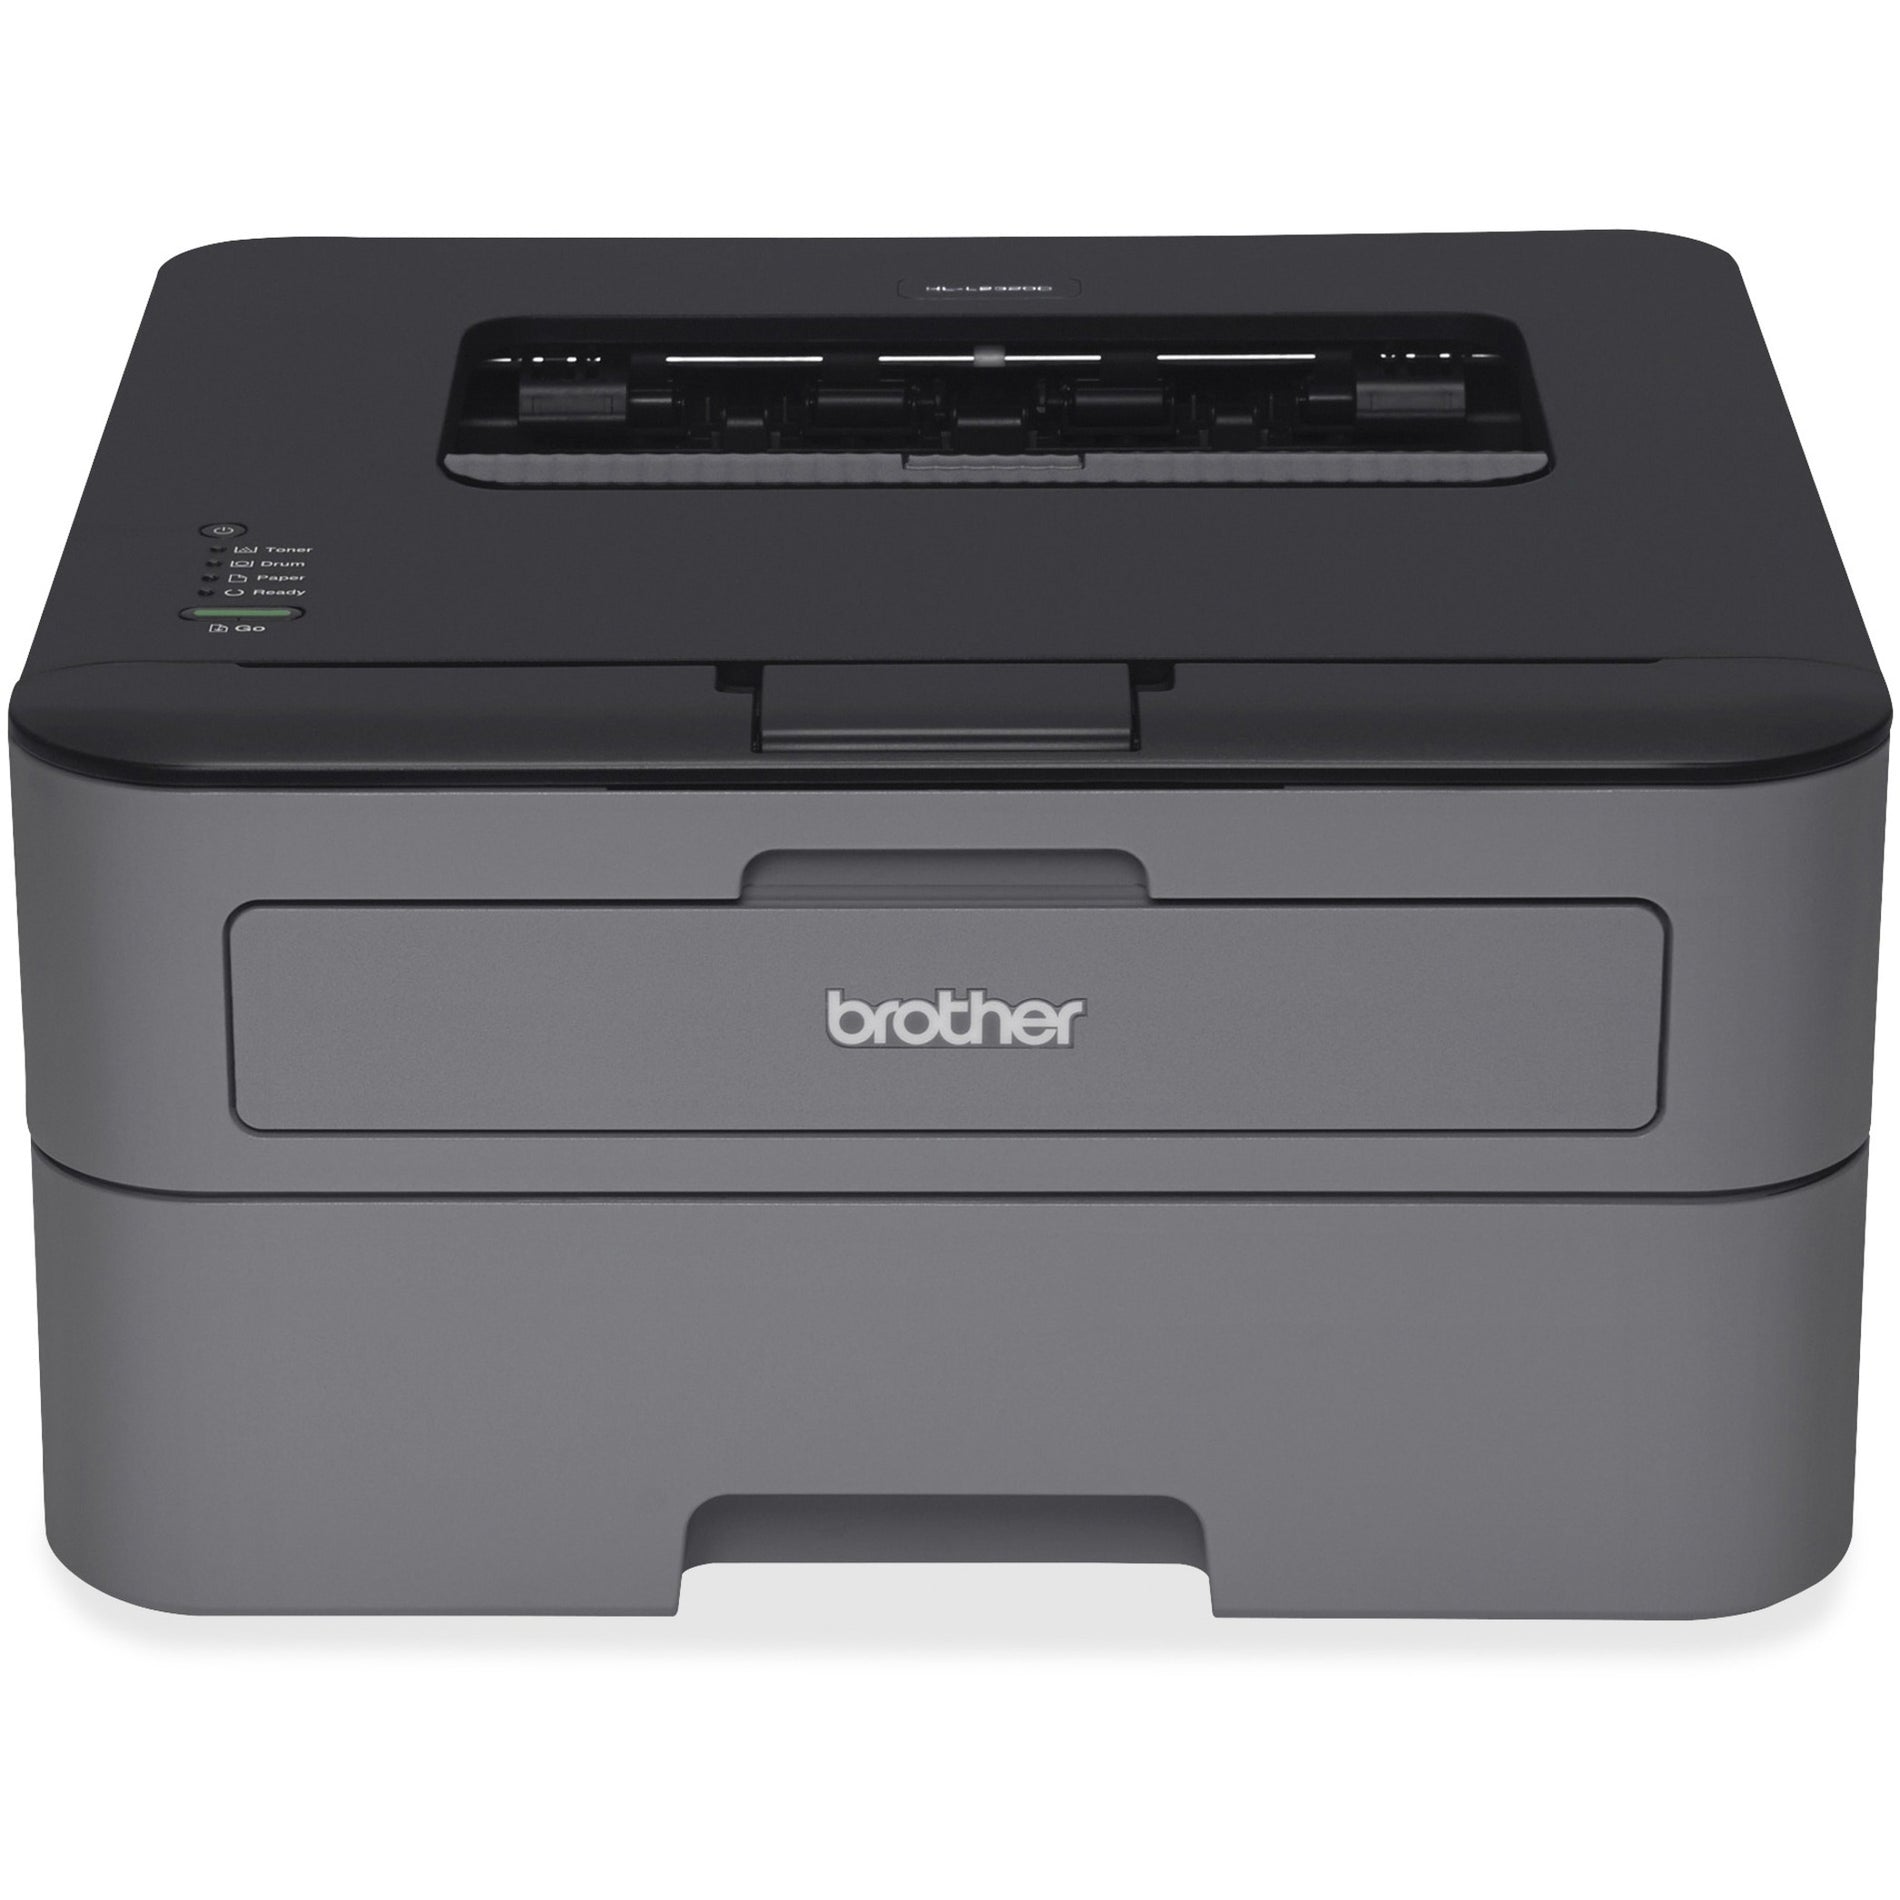 Brother HL-L2300D Monochrome Laser Printer, Duplex Printing, USB 2.0, 26 ppm